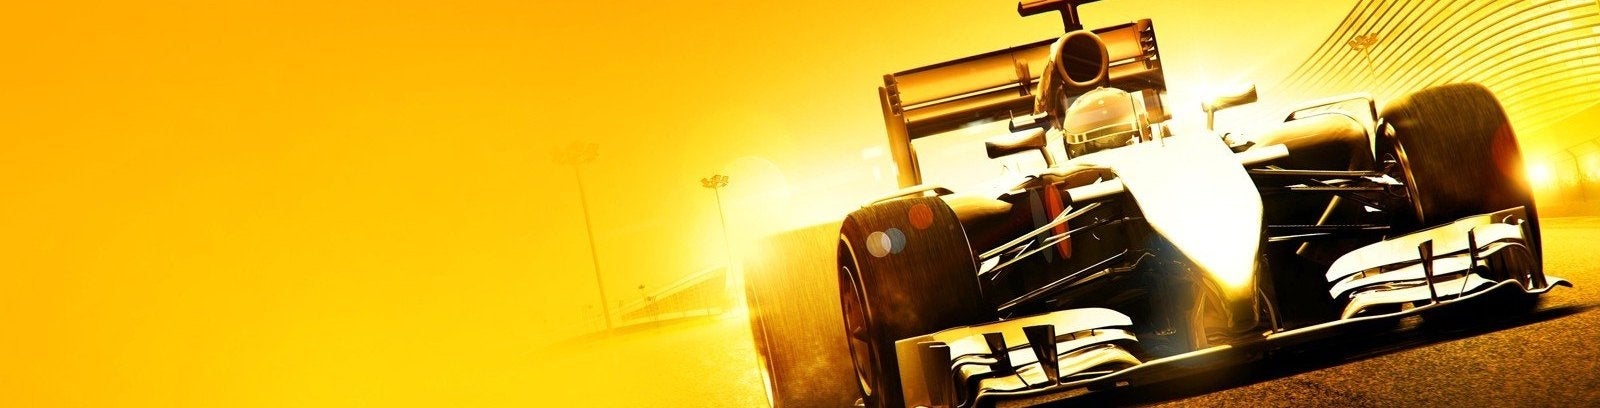 Imagen para Análisis de F1 2014